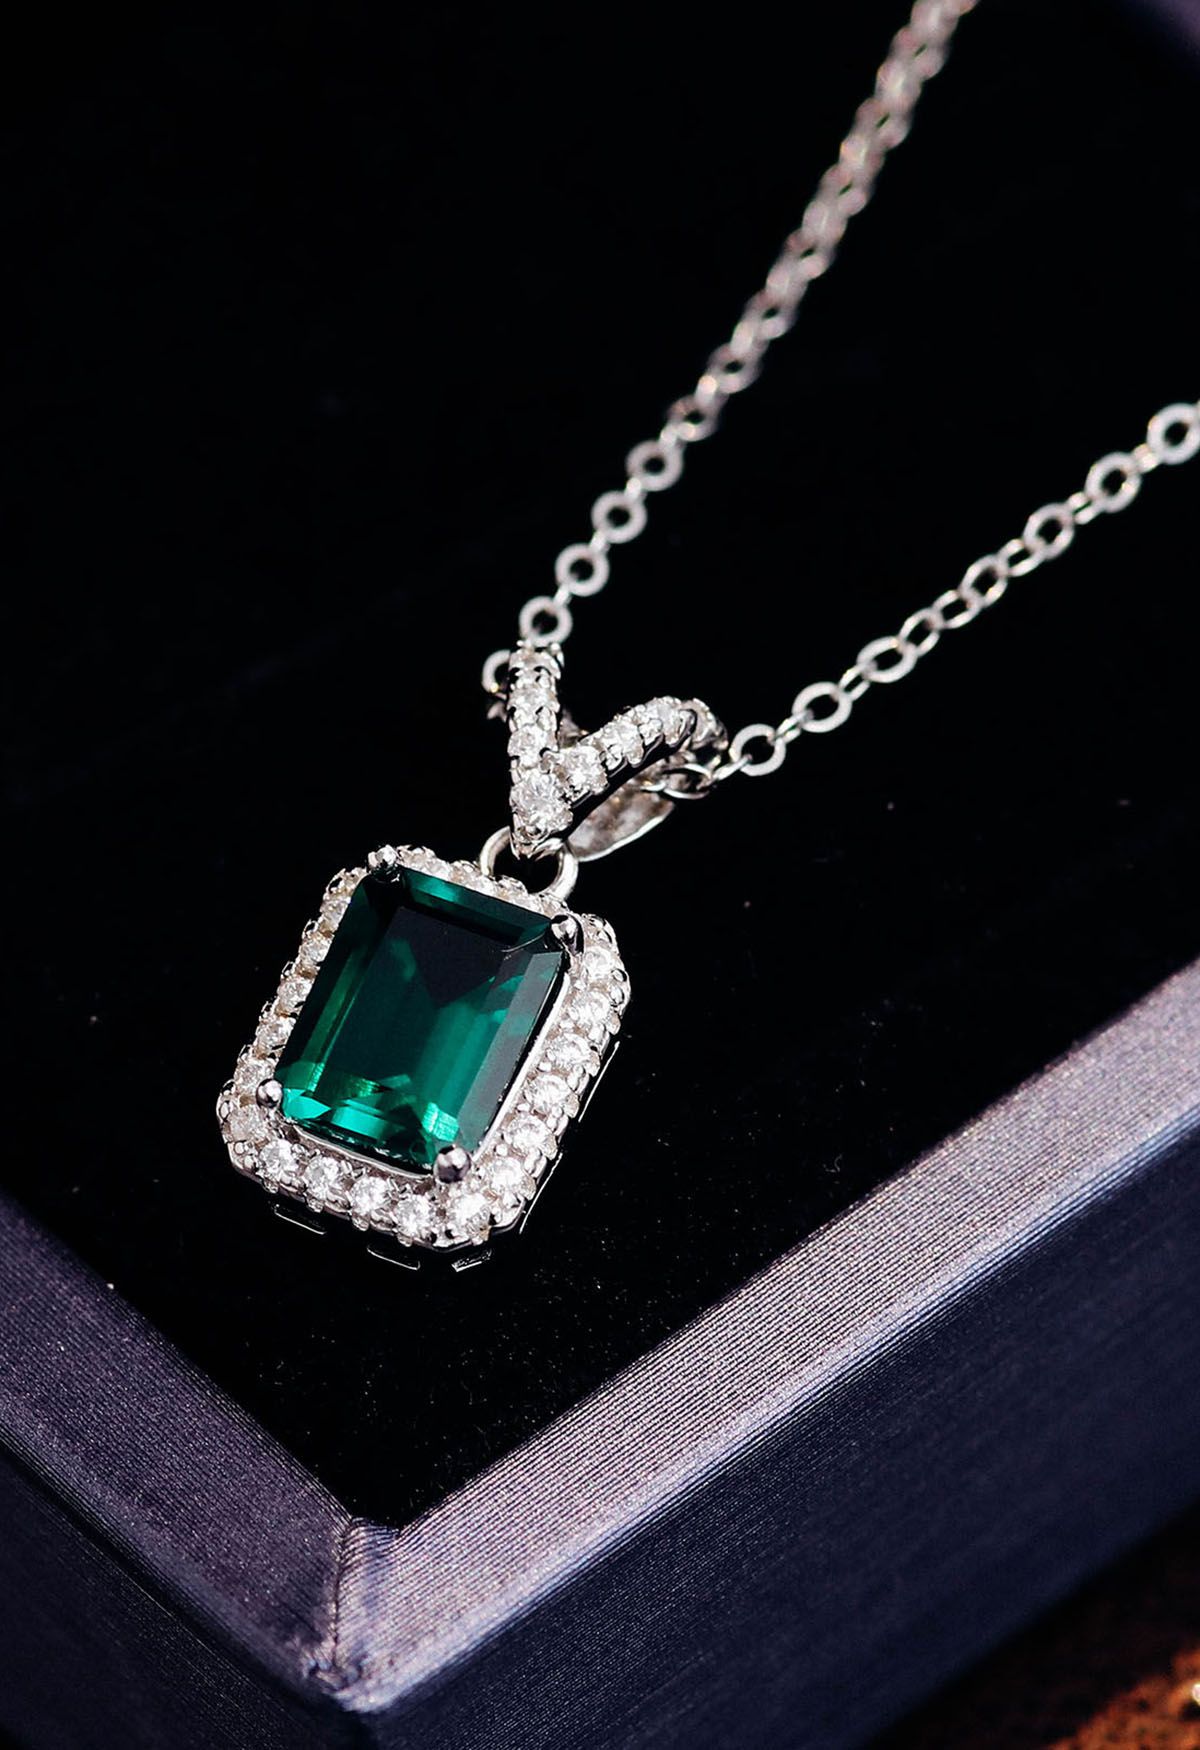 V-förmige Diamant-Smaragd-Edelstein-Halskette